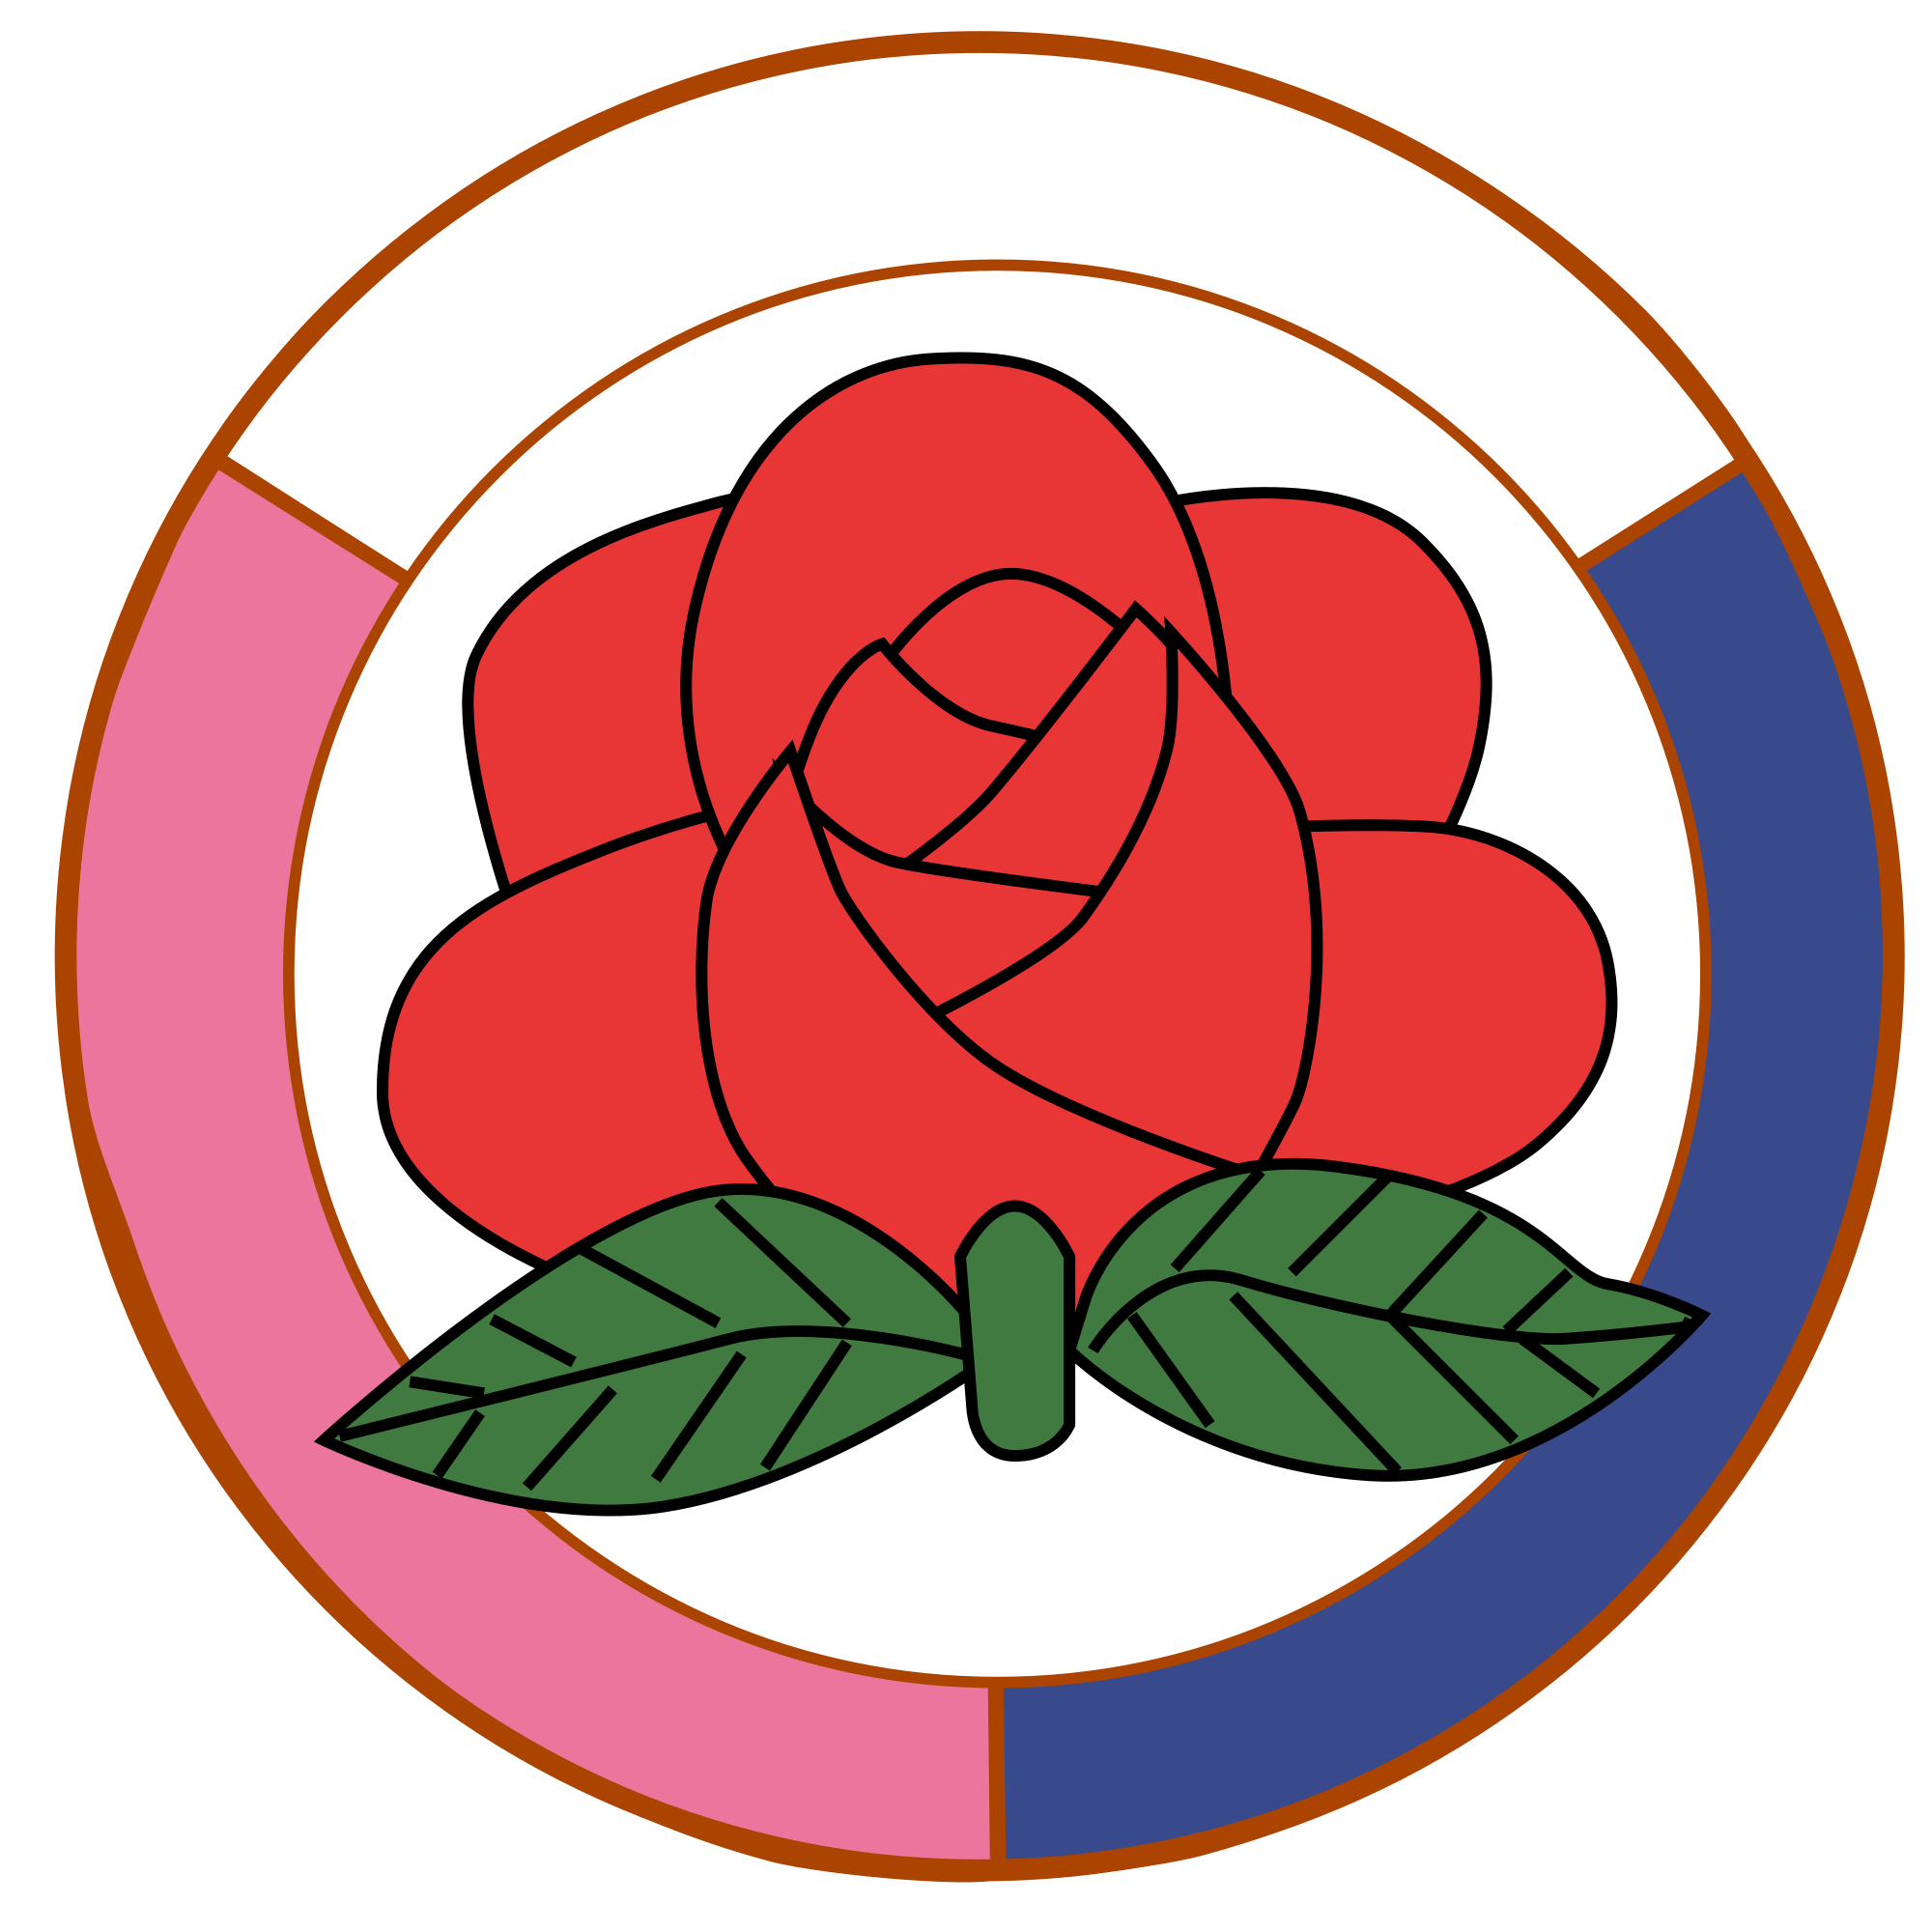 Korean Social Democratic Party - Wikipedia, the free encyclopedia